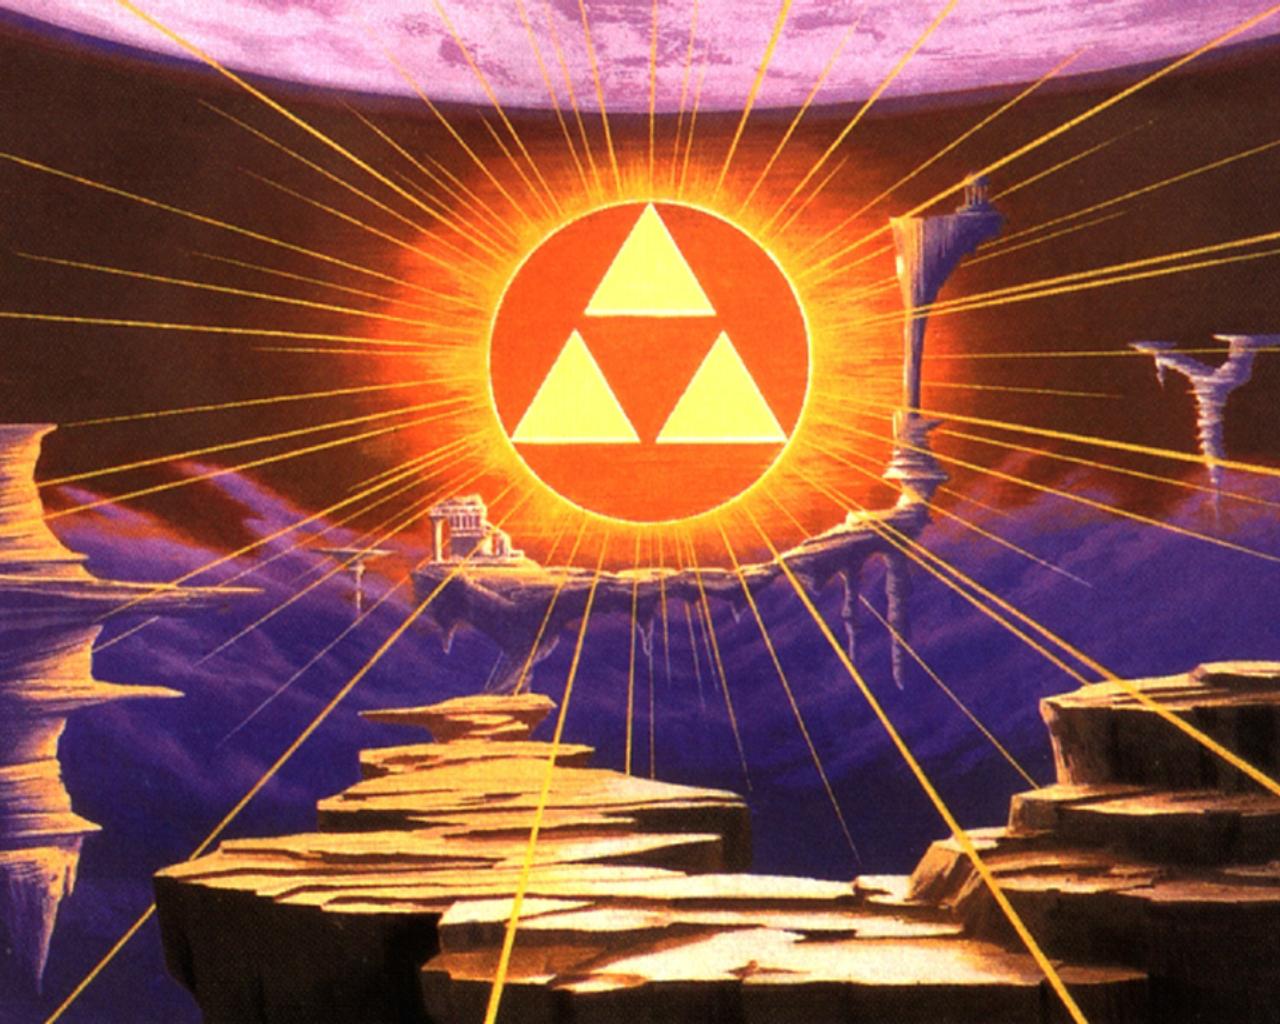 Zelda A Link To The Past Official Wallpaper Desktops Background